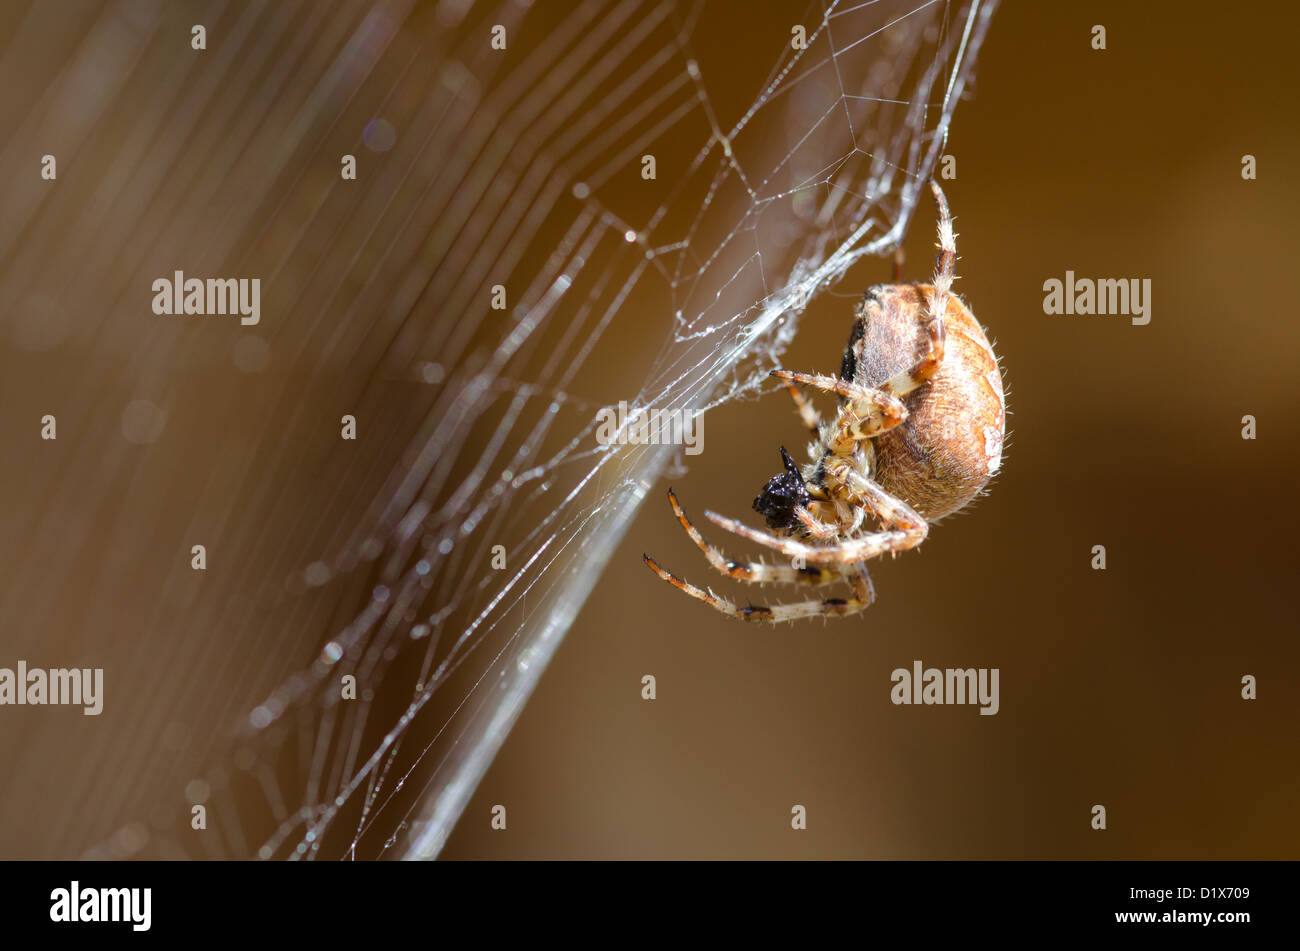 Croce orbweaver, giardino europeo spider nel suo web con la preda / Araneus diadematus Foto Stock